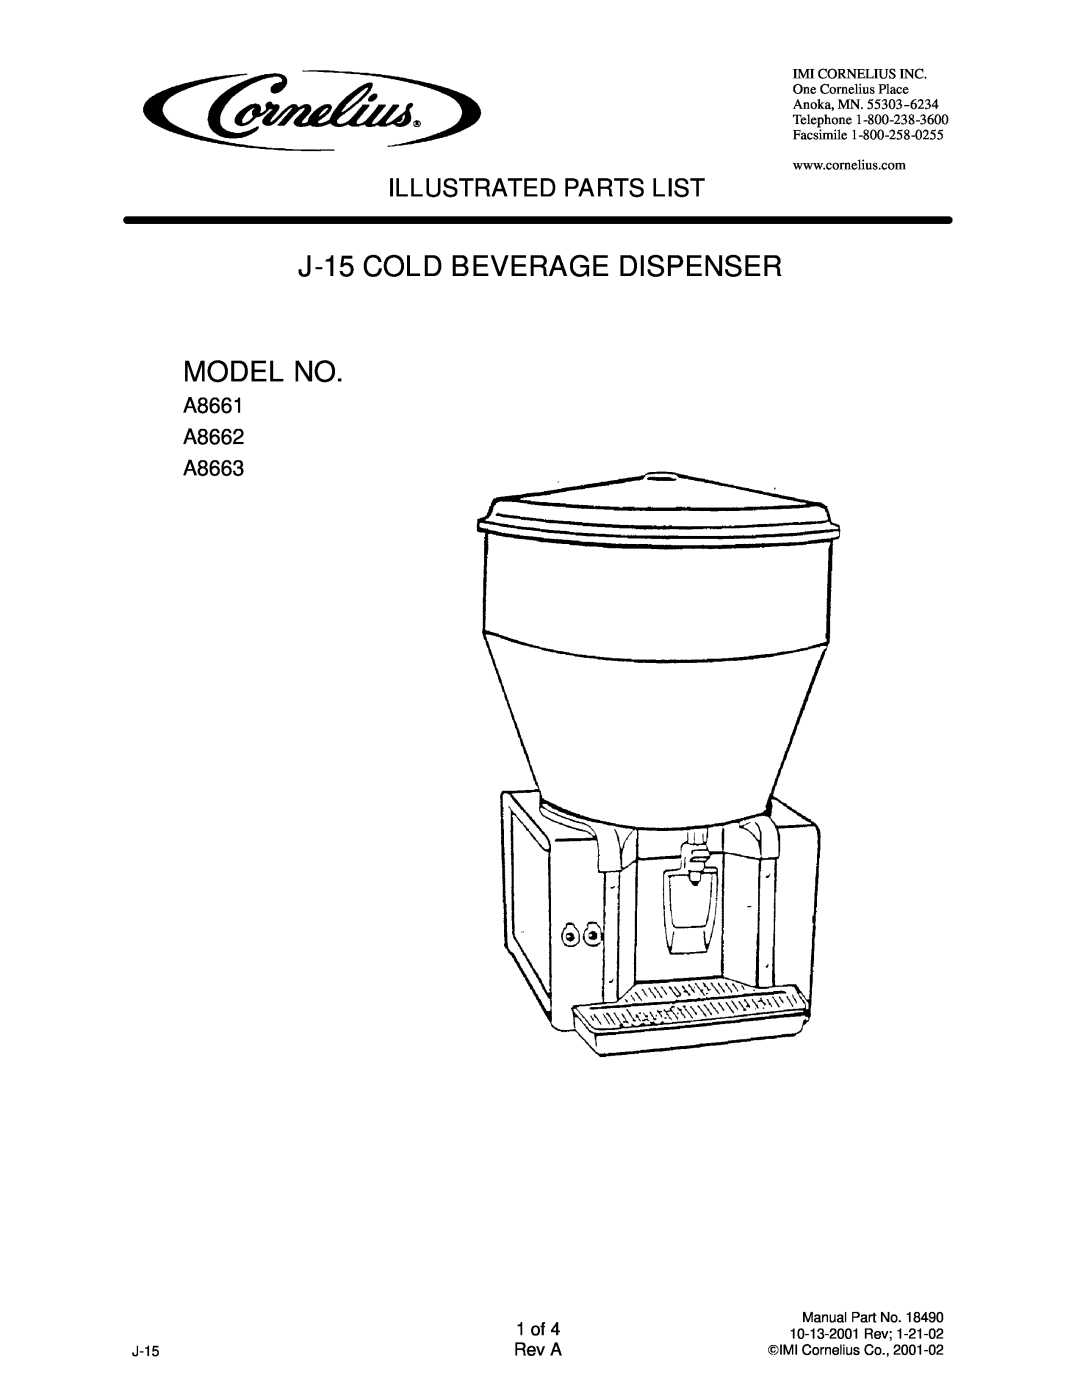 Cornelius manual J-15COLD BEVERAGE DISPENSER MODEL NO, Illustrated Parts List, 1 of, Rev A, A8661 A8662 A8663 